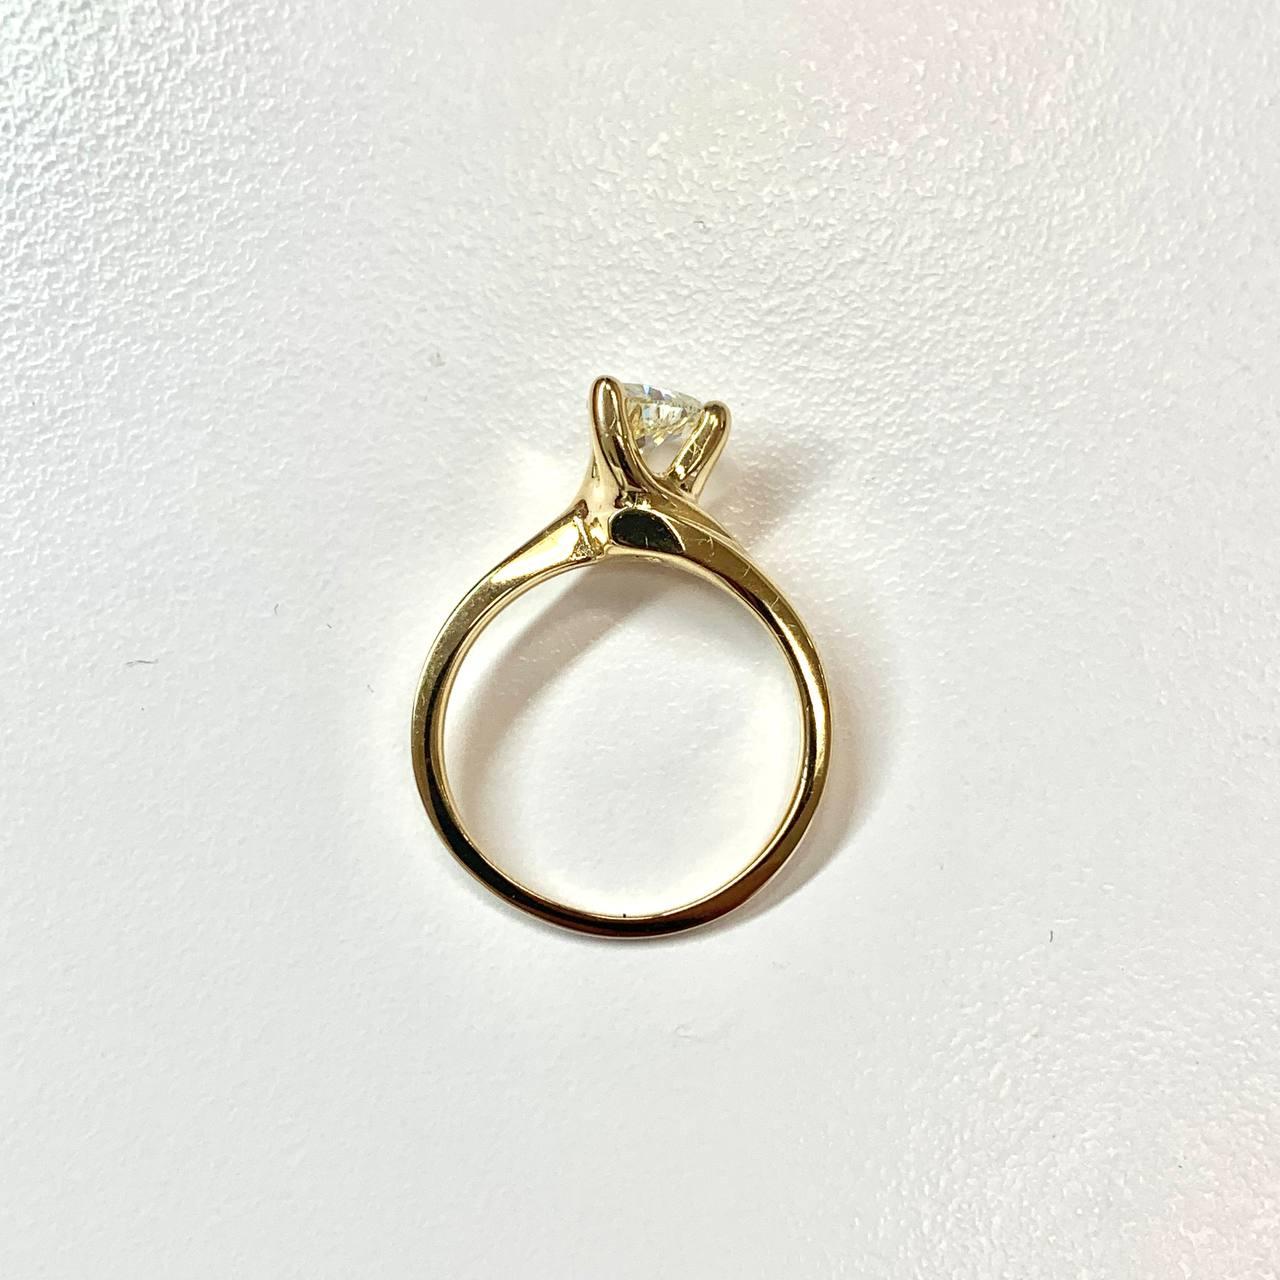 0.76 ct. White Trillion Diamond Ring in 14K Yellow Gold 6.25US